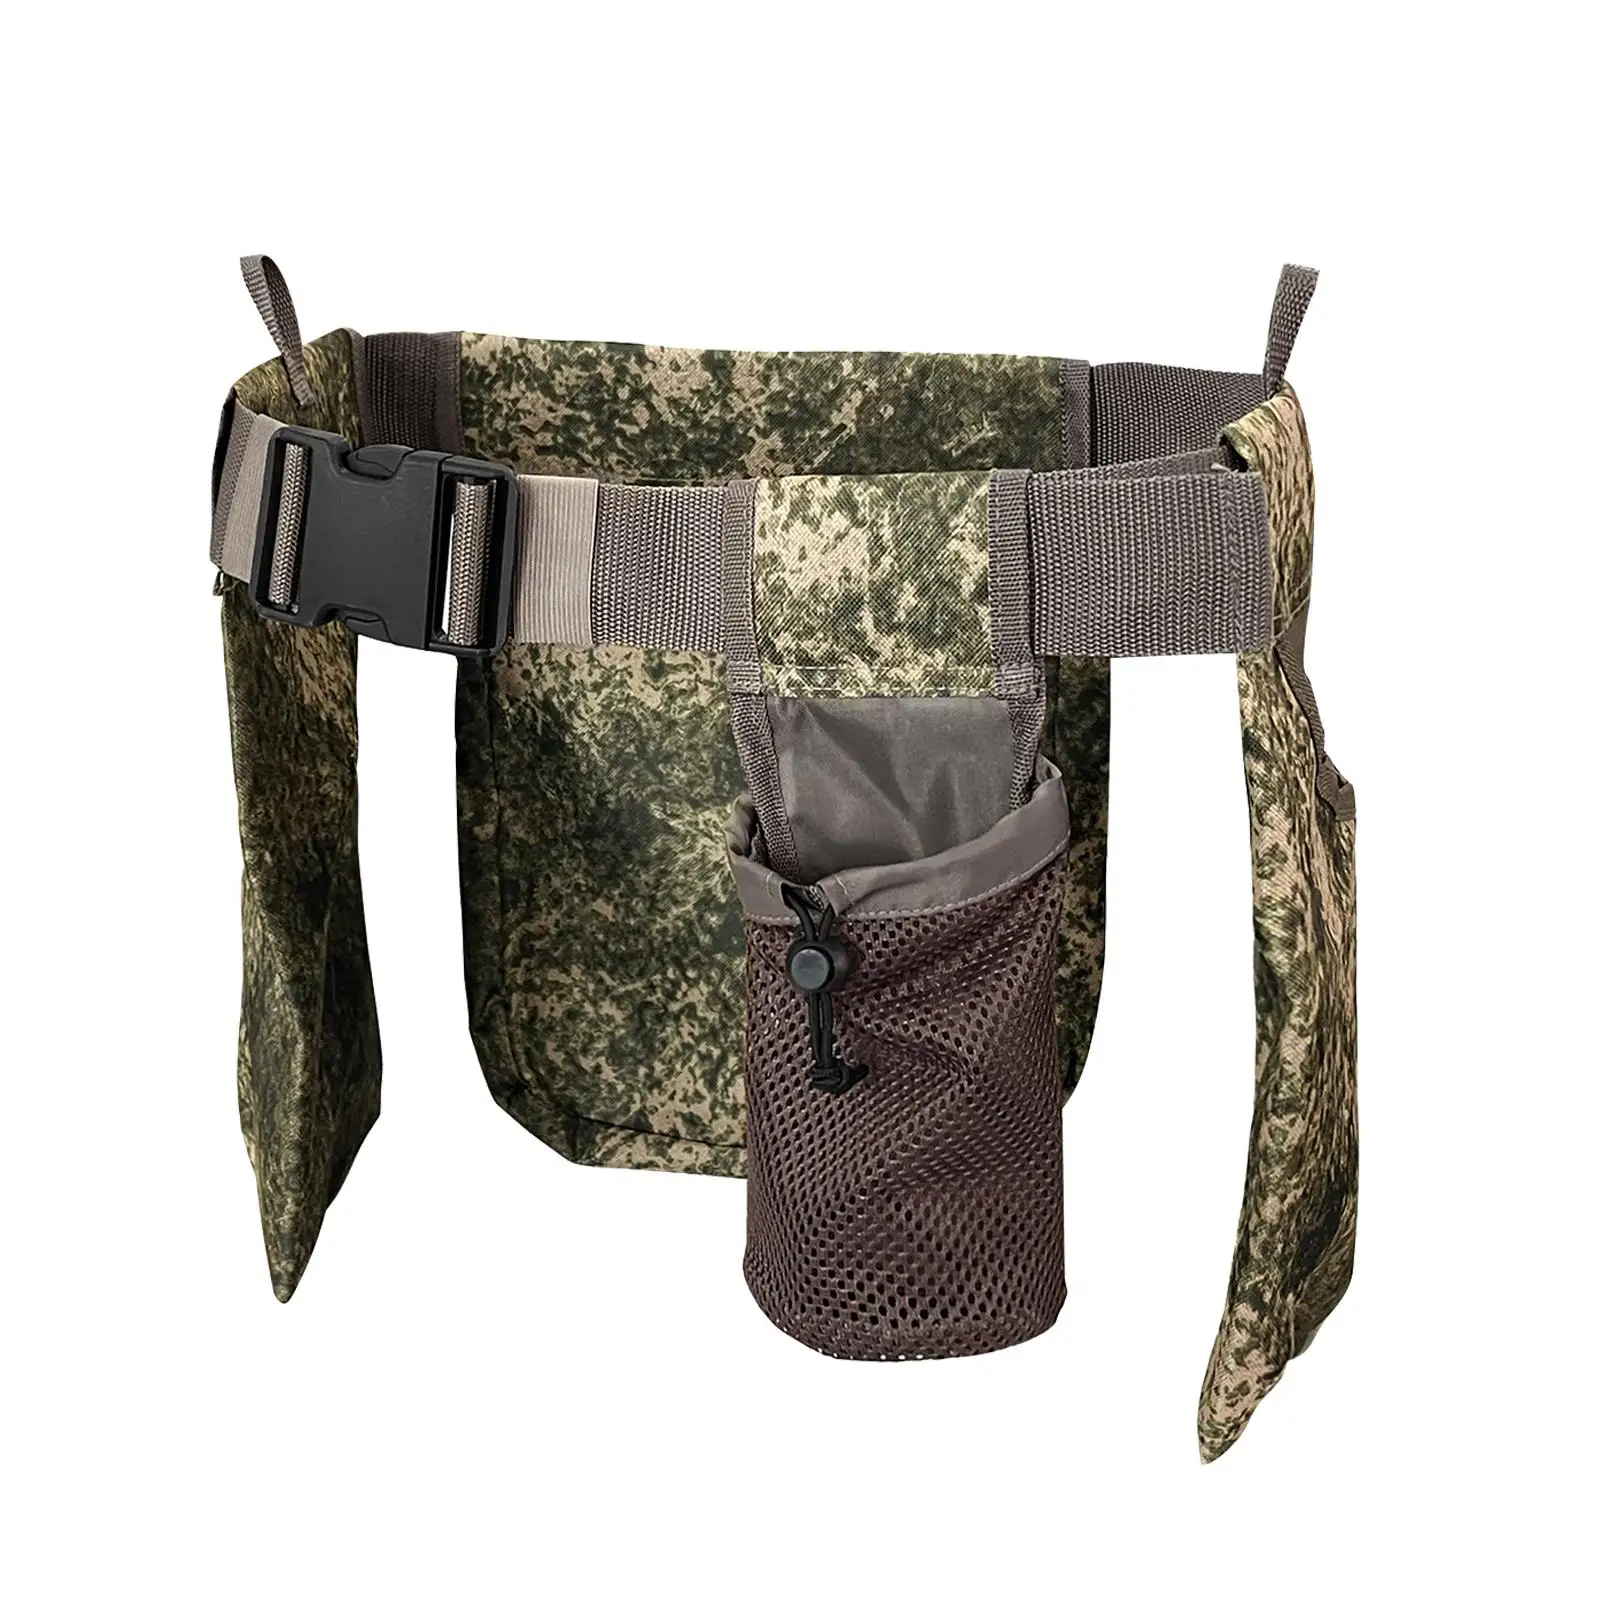 Waist Bag Scratch Resistant Outdoor Belt Bag for Camping Hiking Sports